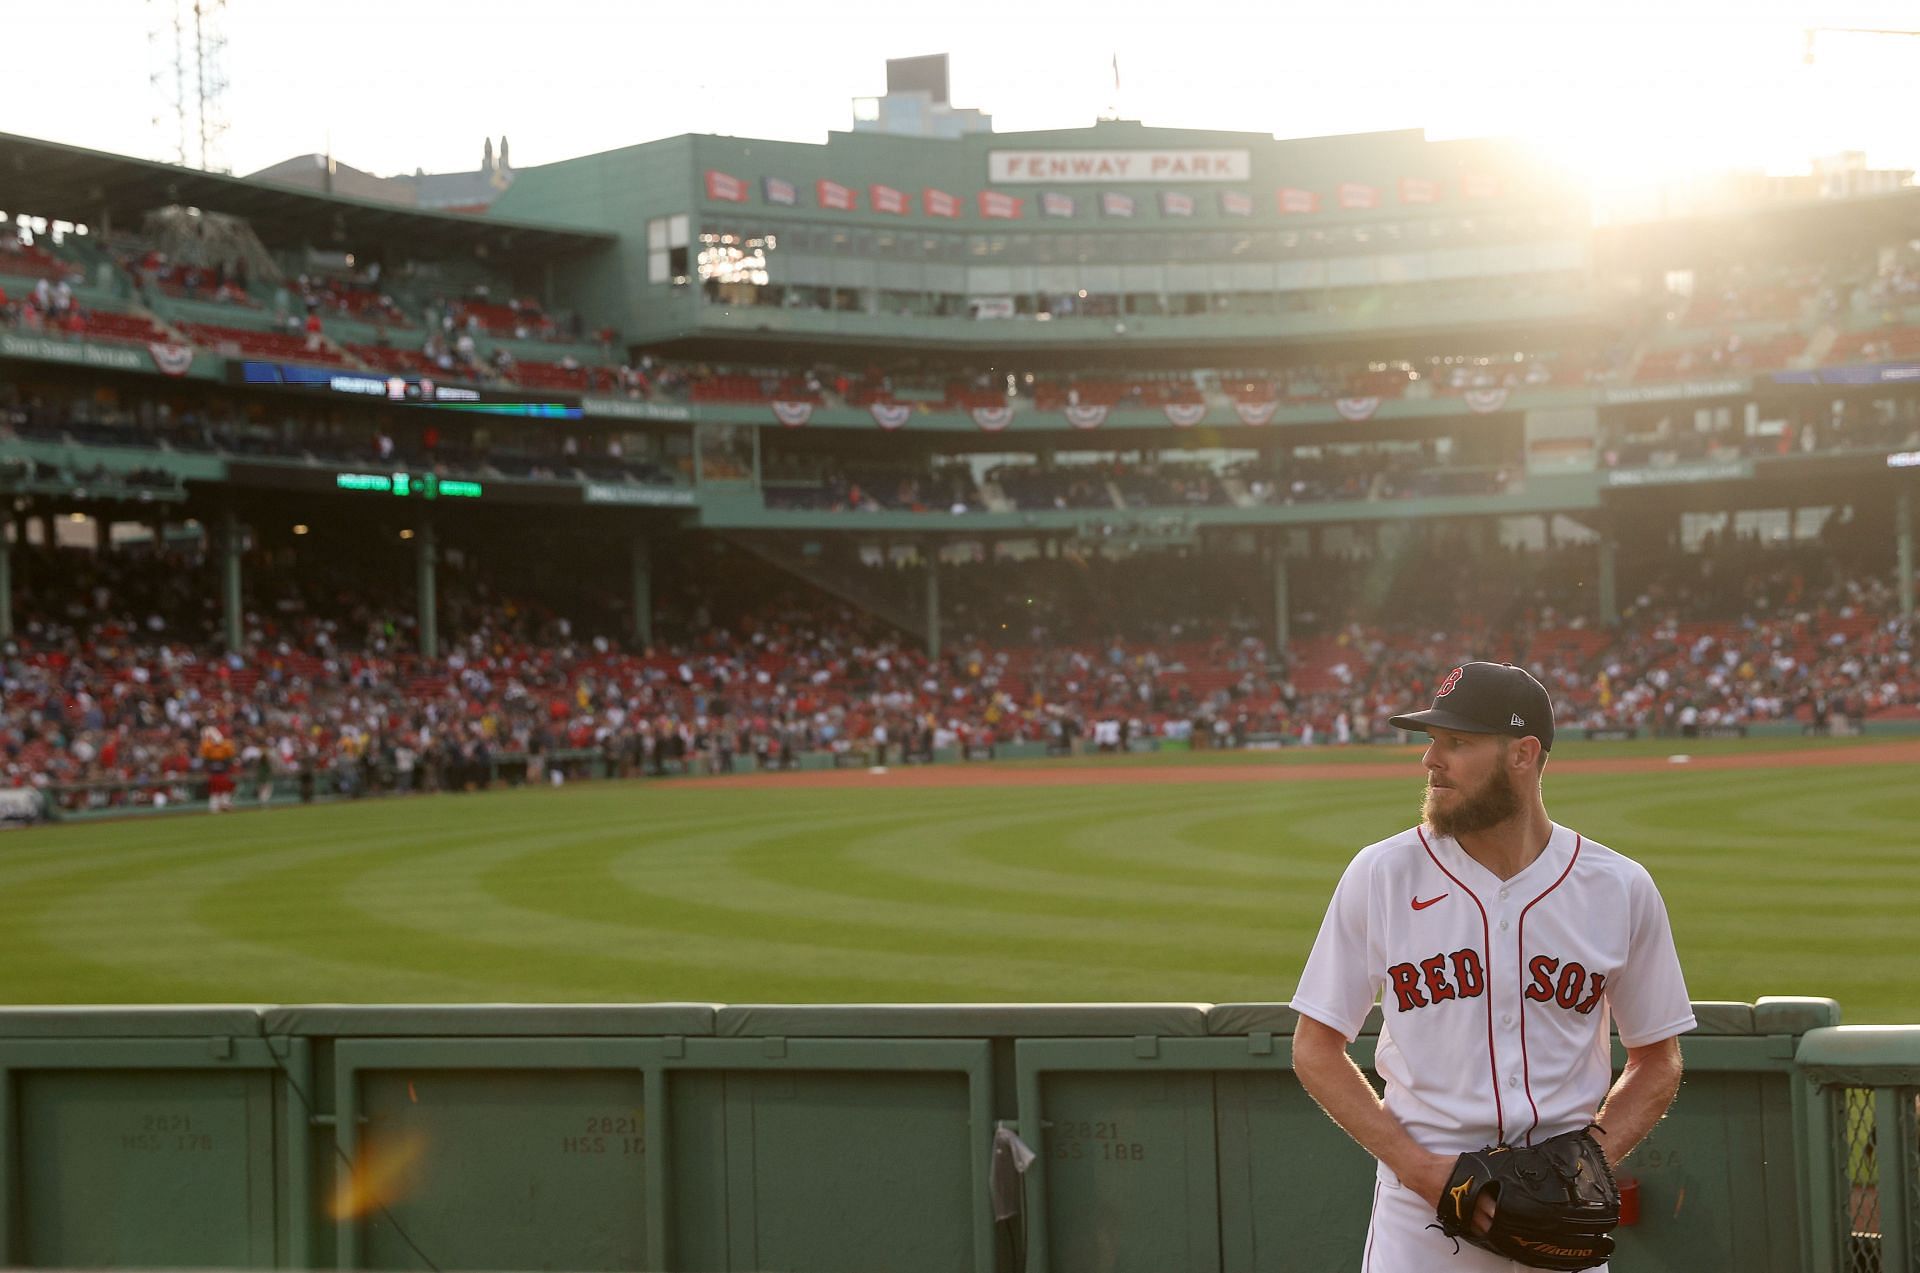 All-Star left-hander Chris Sale eyes Boston Red Sox's rotation on